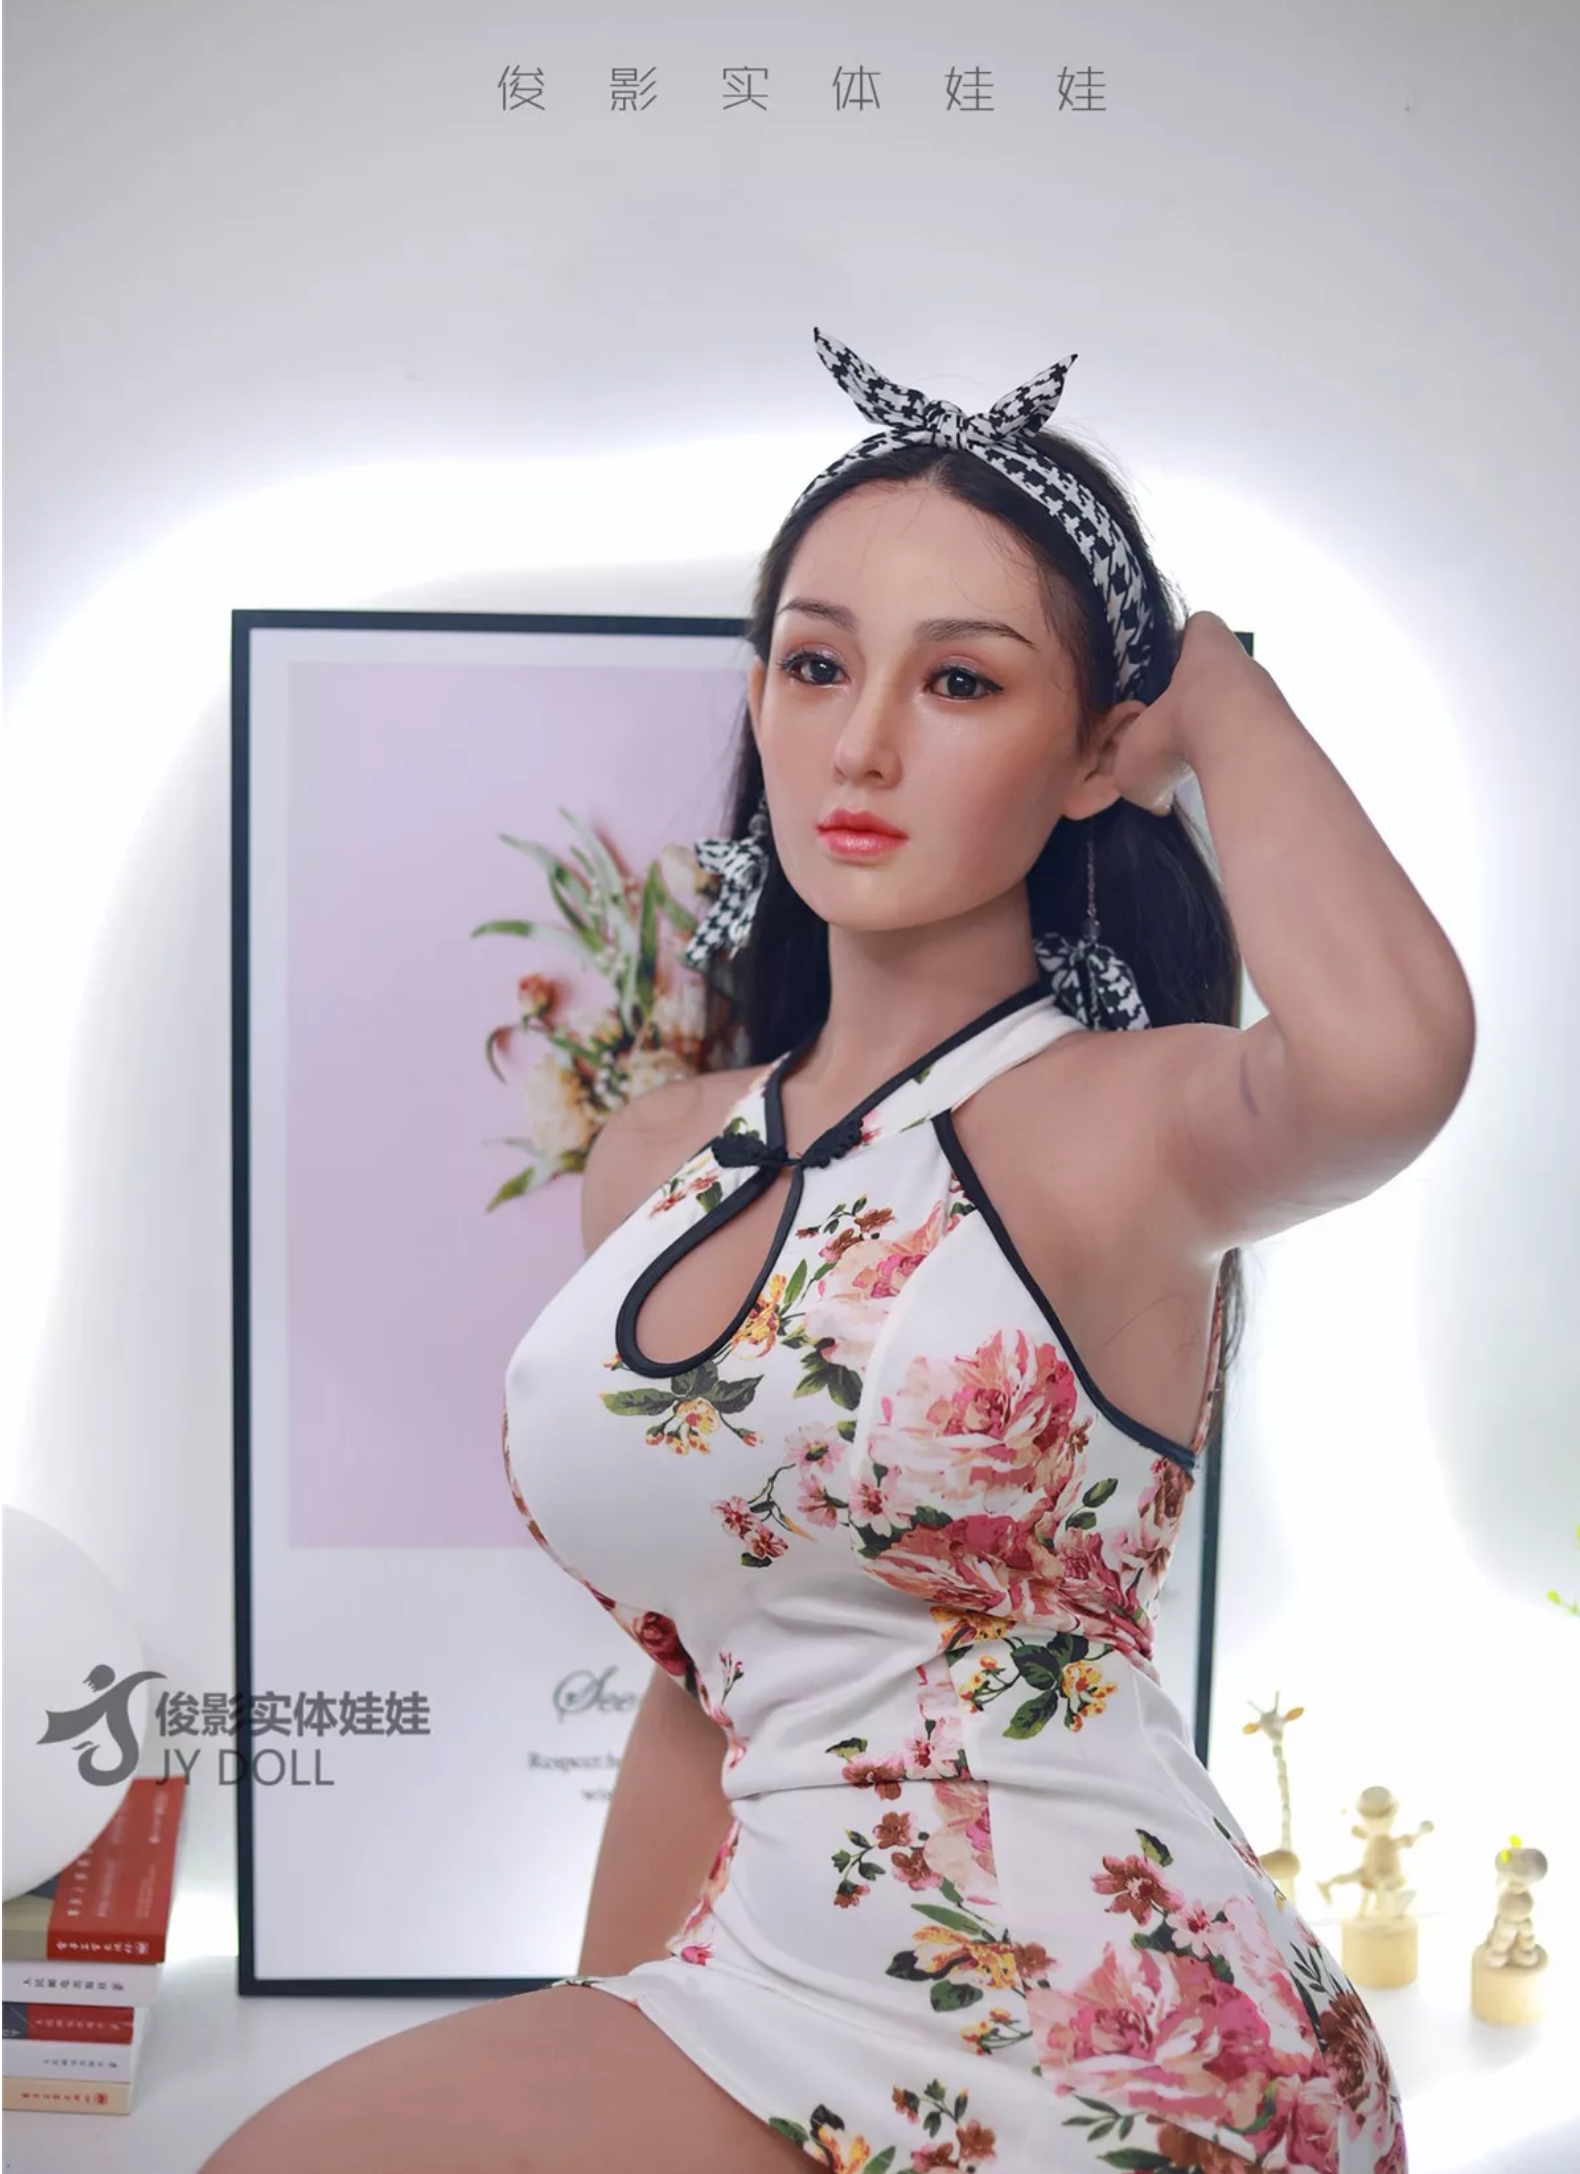 JY Doll 166 cm Fusion - ZhaoMin | Sex Dolls SG